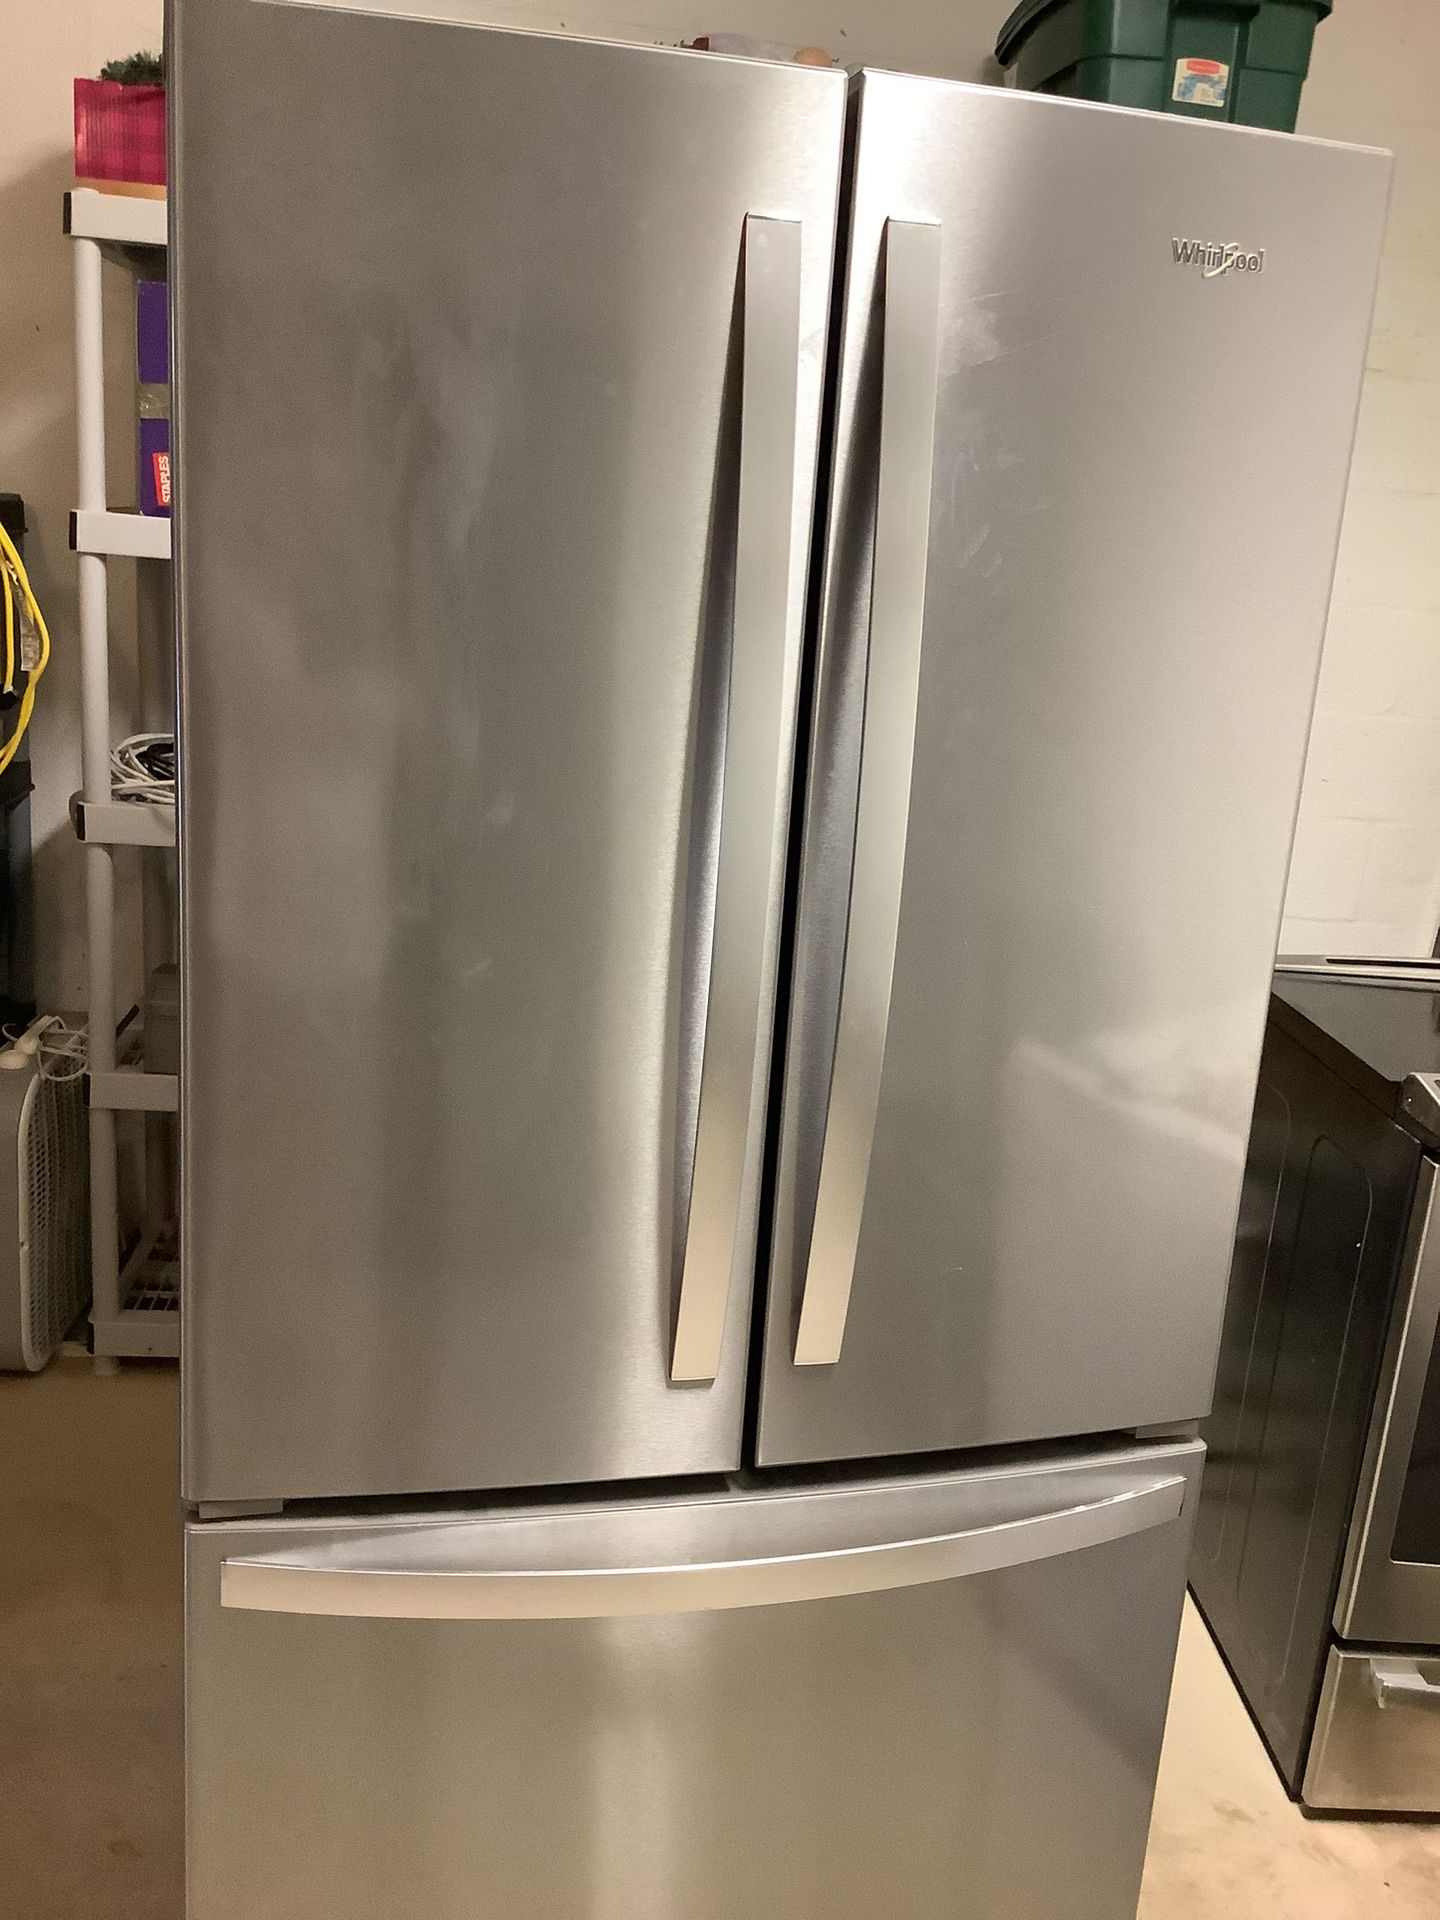 Whirlpool Frenchdoor Refrigerator 